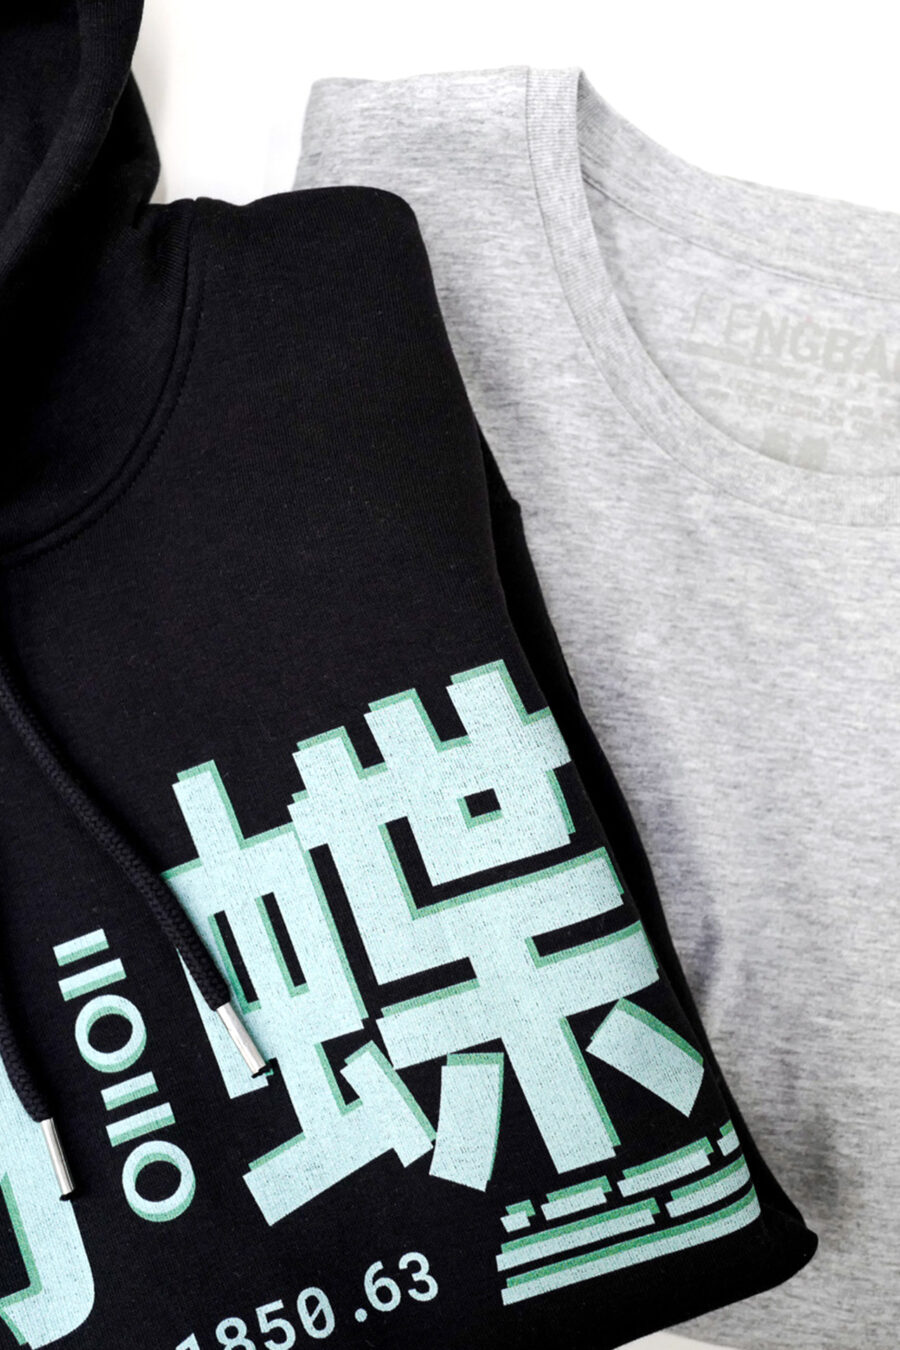 fengbao kung fu shop paket hoodie shirt wien kampfkunst 1080 hoch